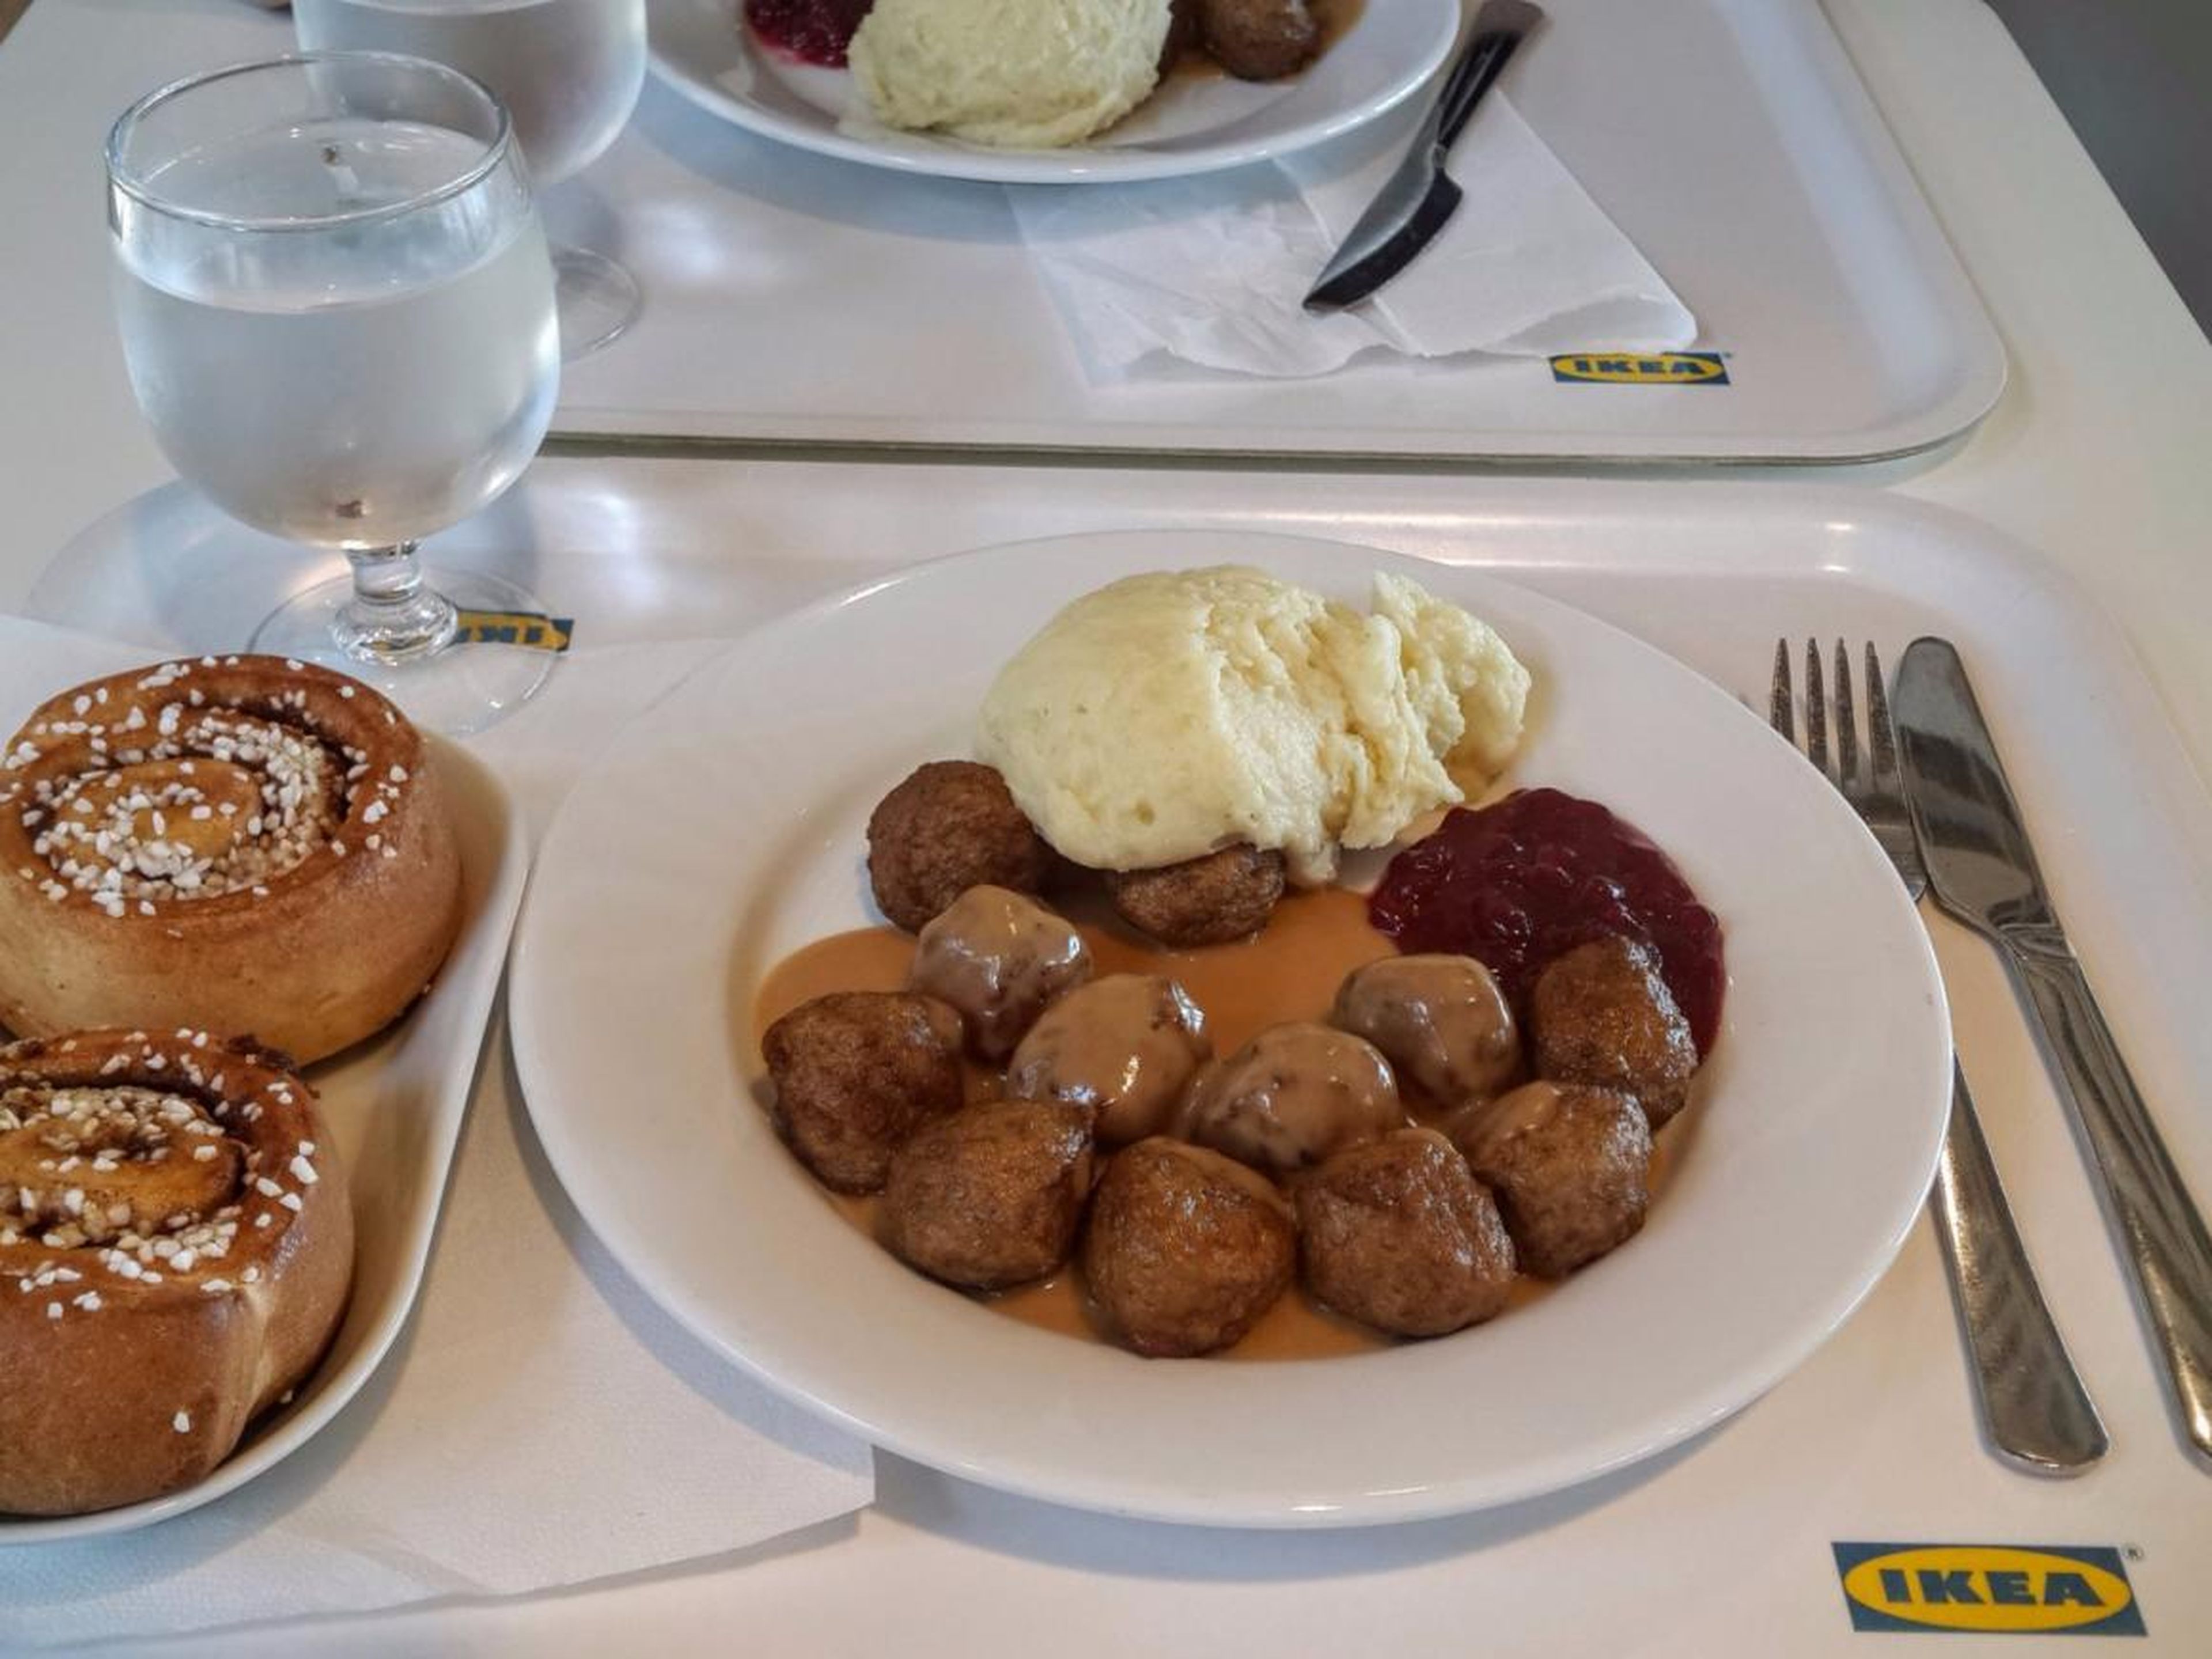 Swedish meatballs and mashed potatoes.